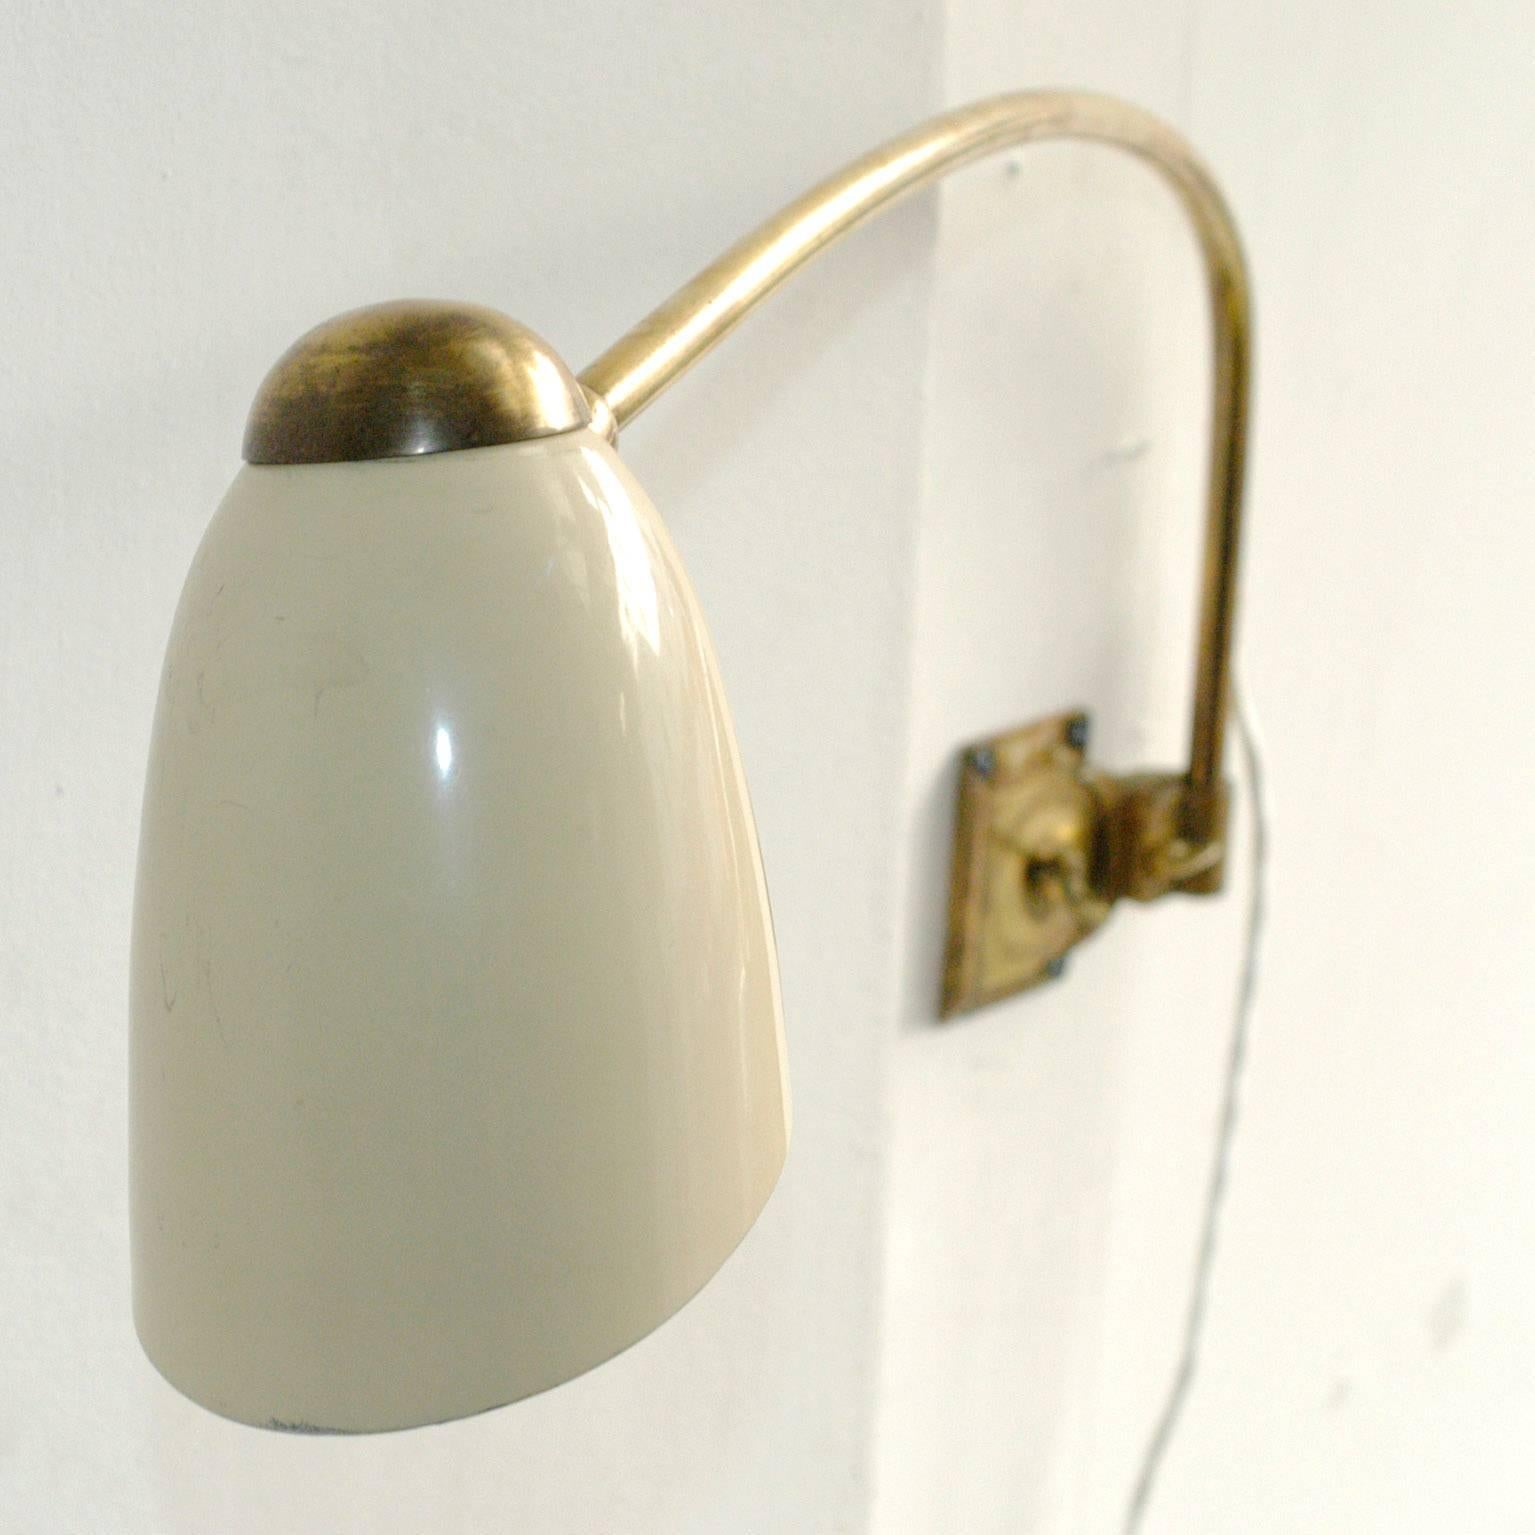 Lacquered Italian Midcentury Brass Wall Light by Arteluce